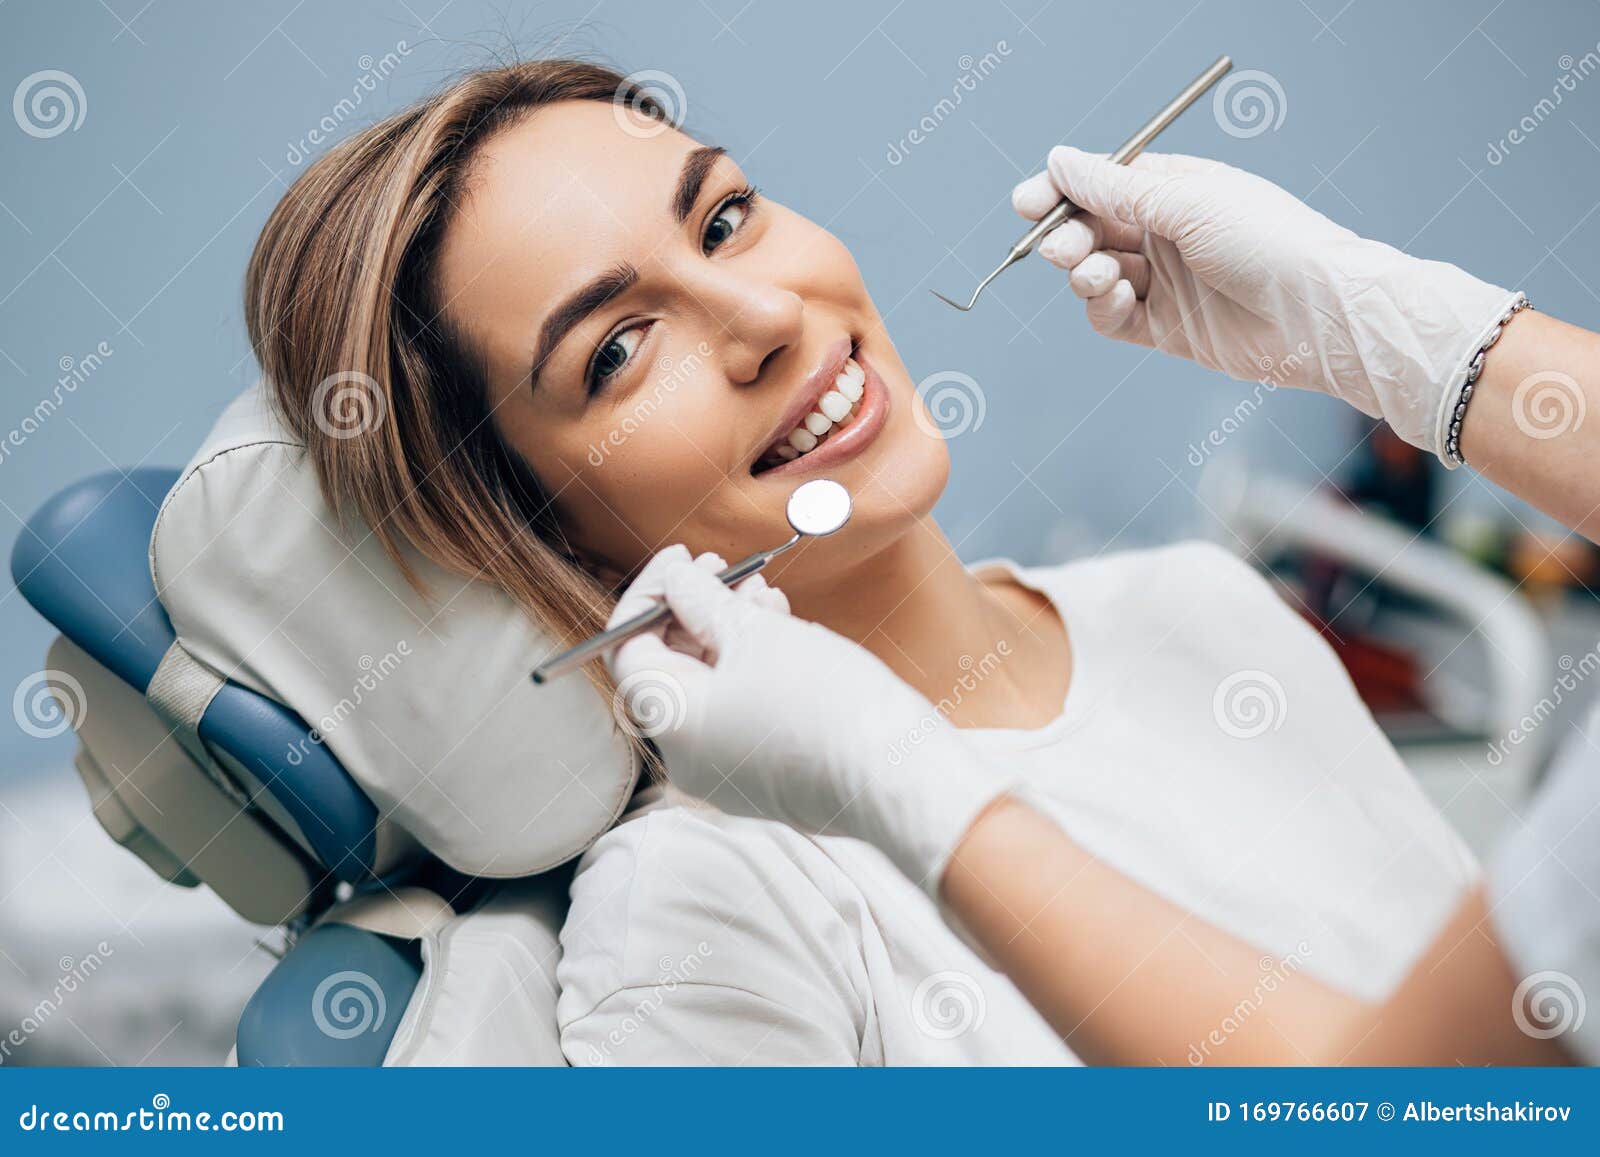 portrait good looking woman dental examination portrait young smiling blond good looking women dental examination 169766607